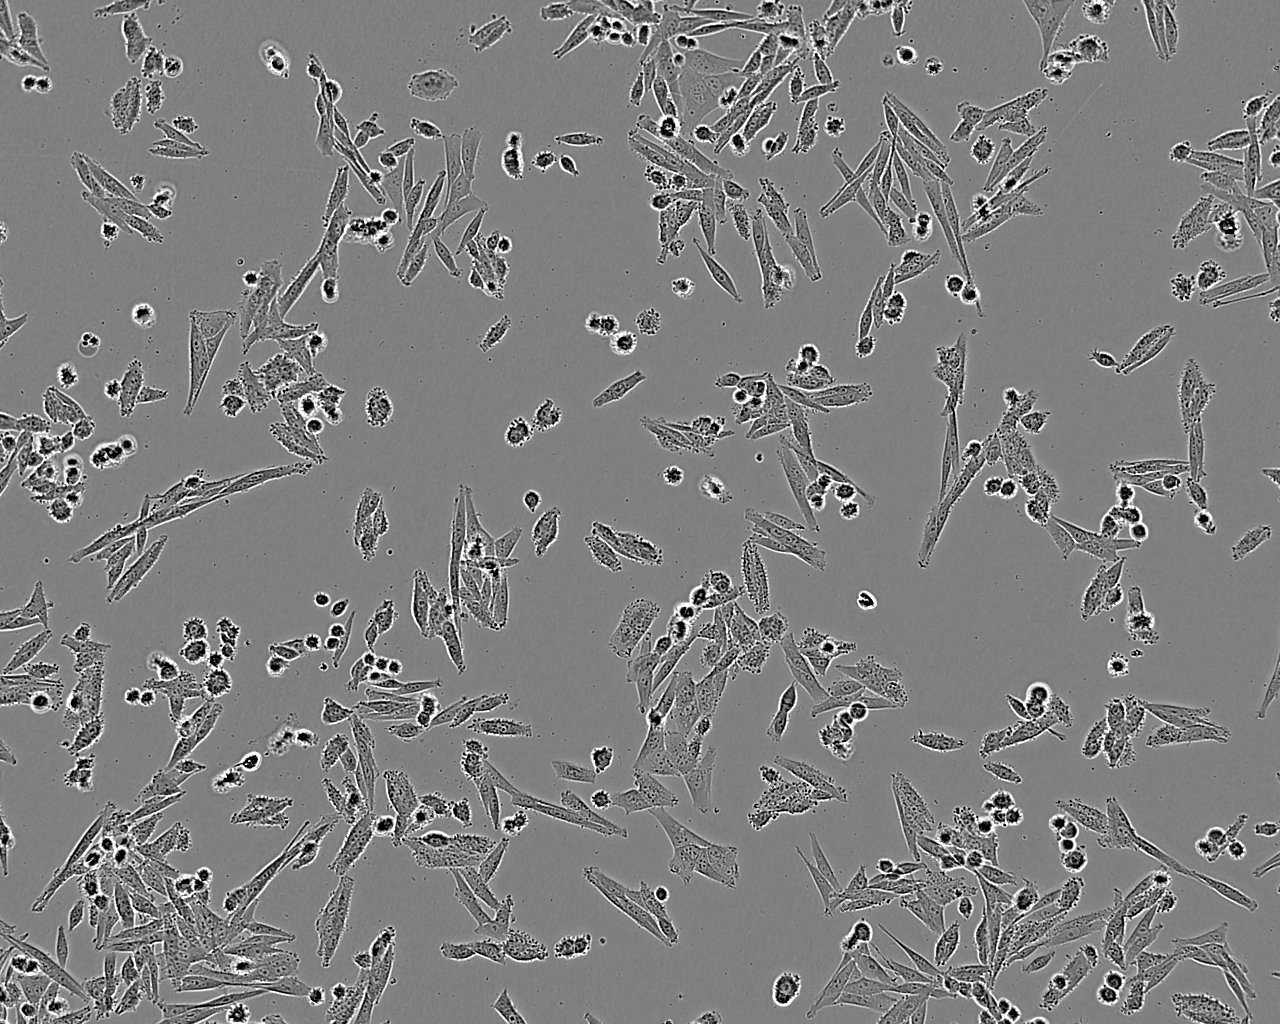 NCI-H2029 Cell:人小细胞肺癌细胞系,NCI-H2029 Cell